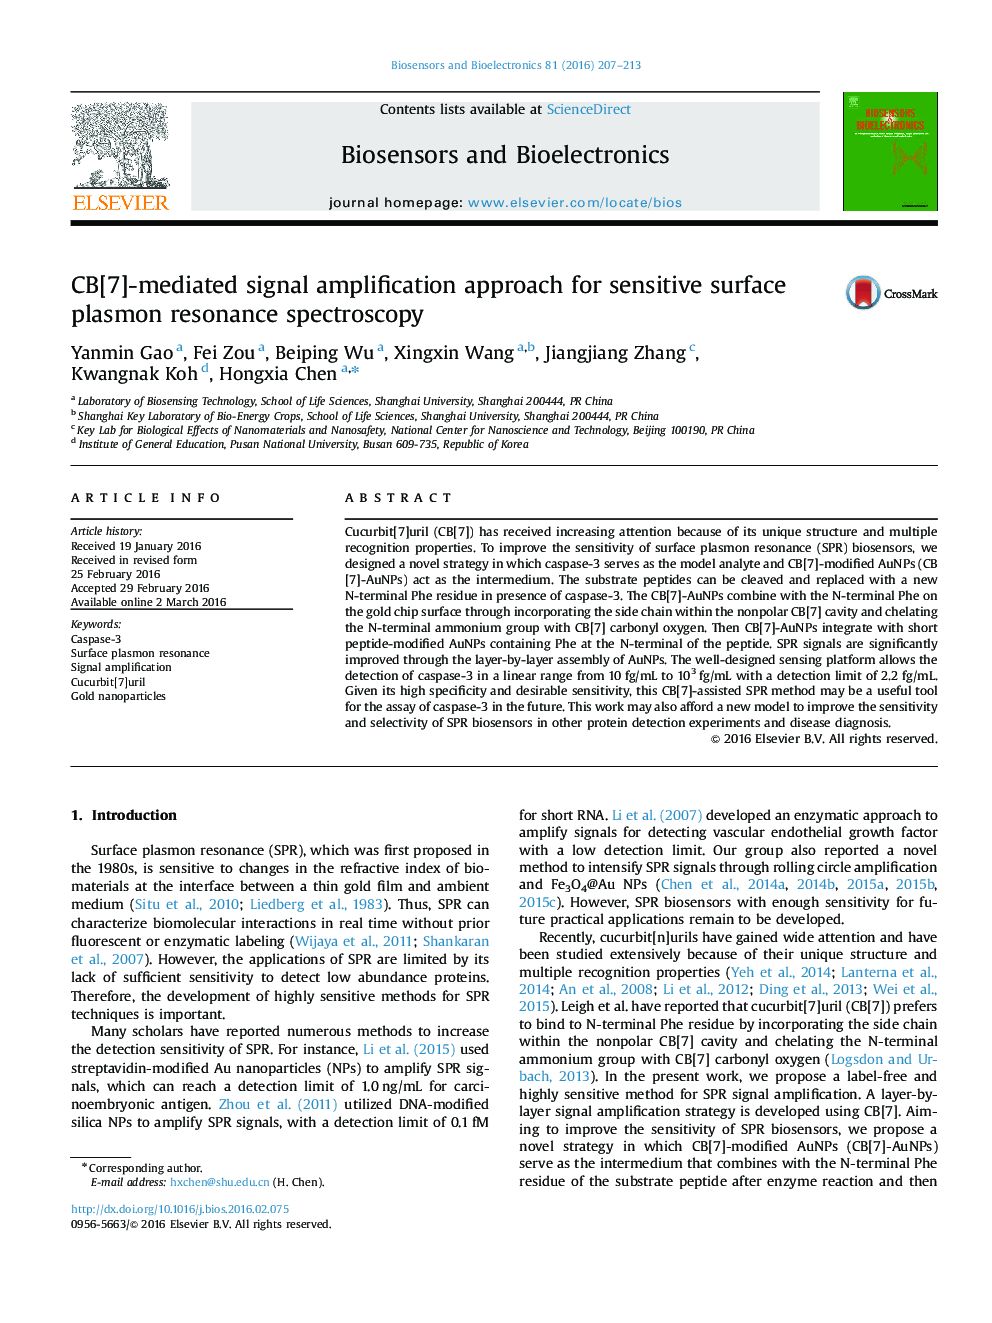 CB[7]-mediated signal amplification approach for sensitive surface plasmon resonance spectroscopy